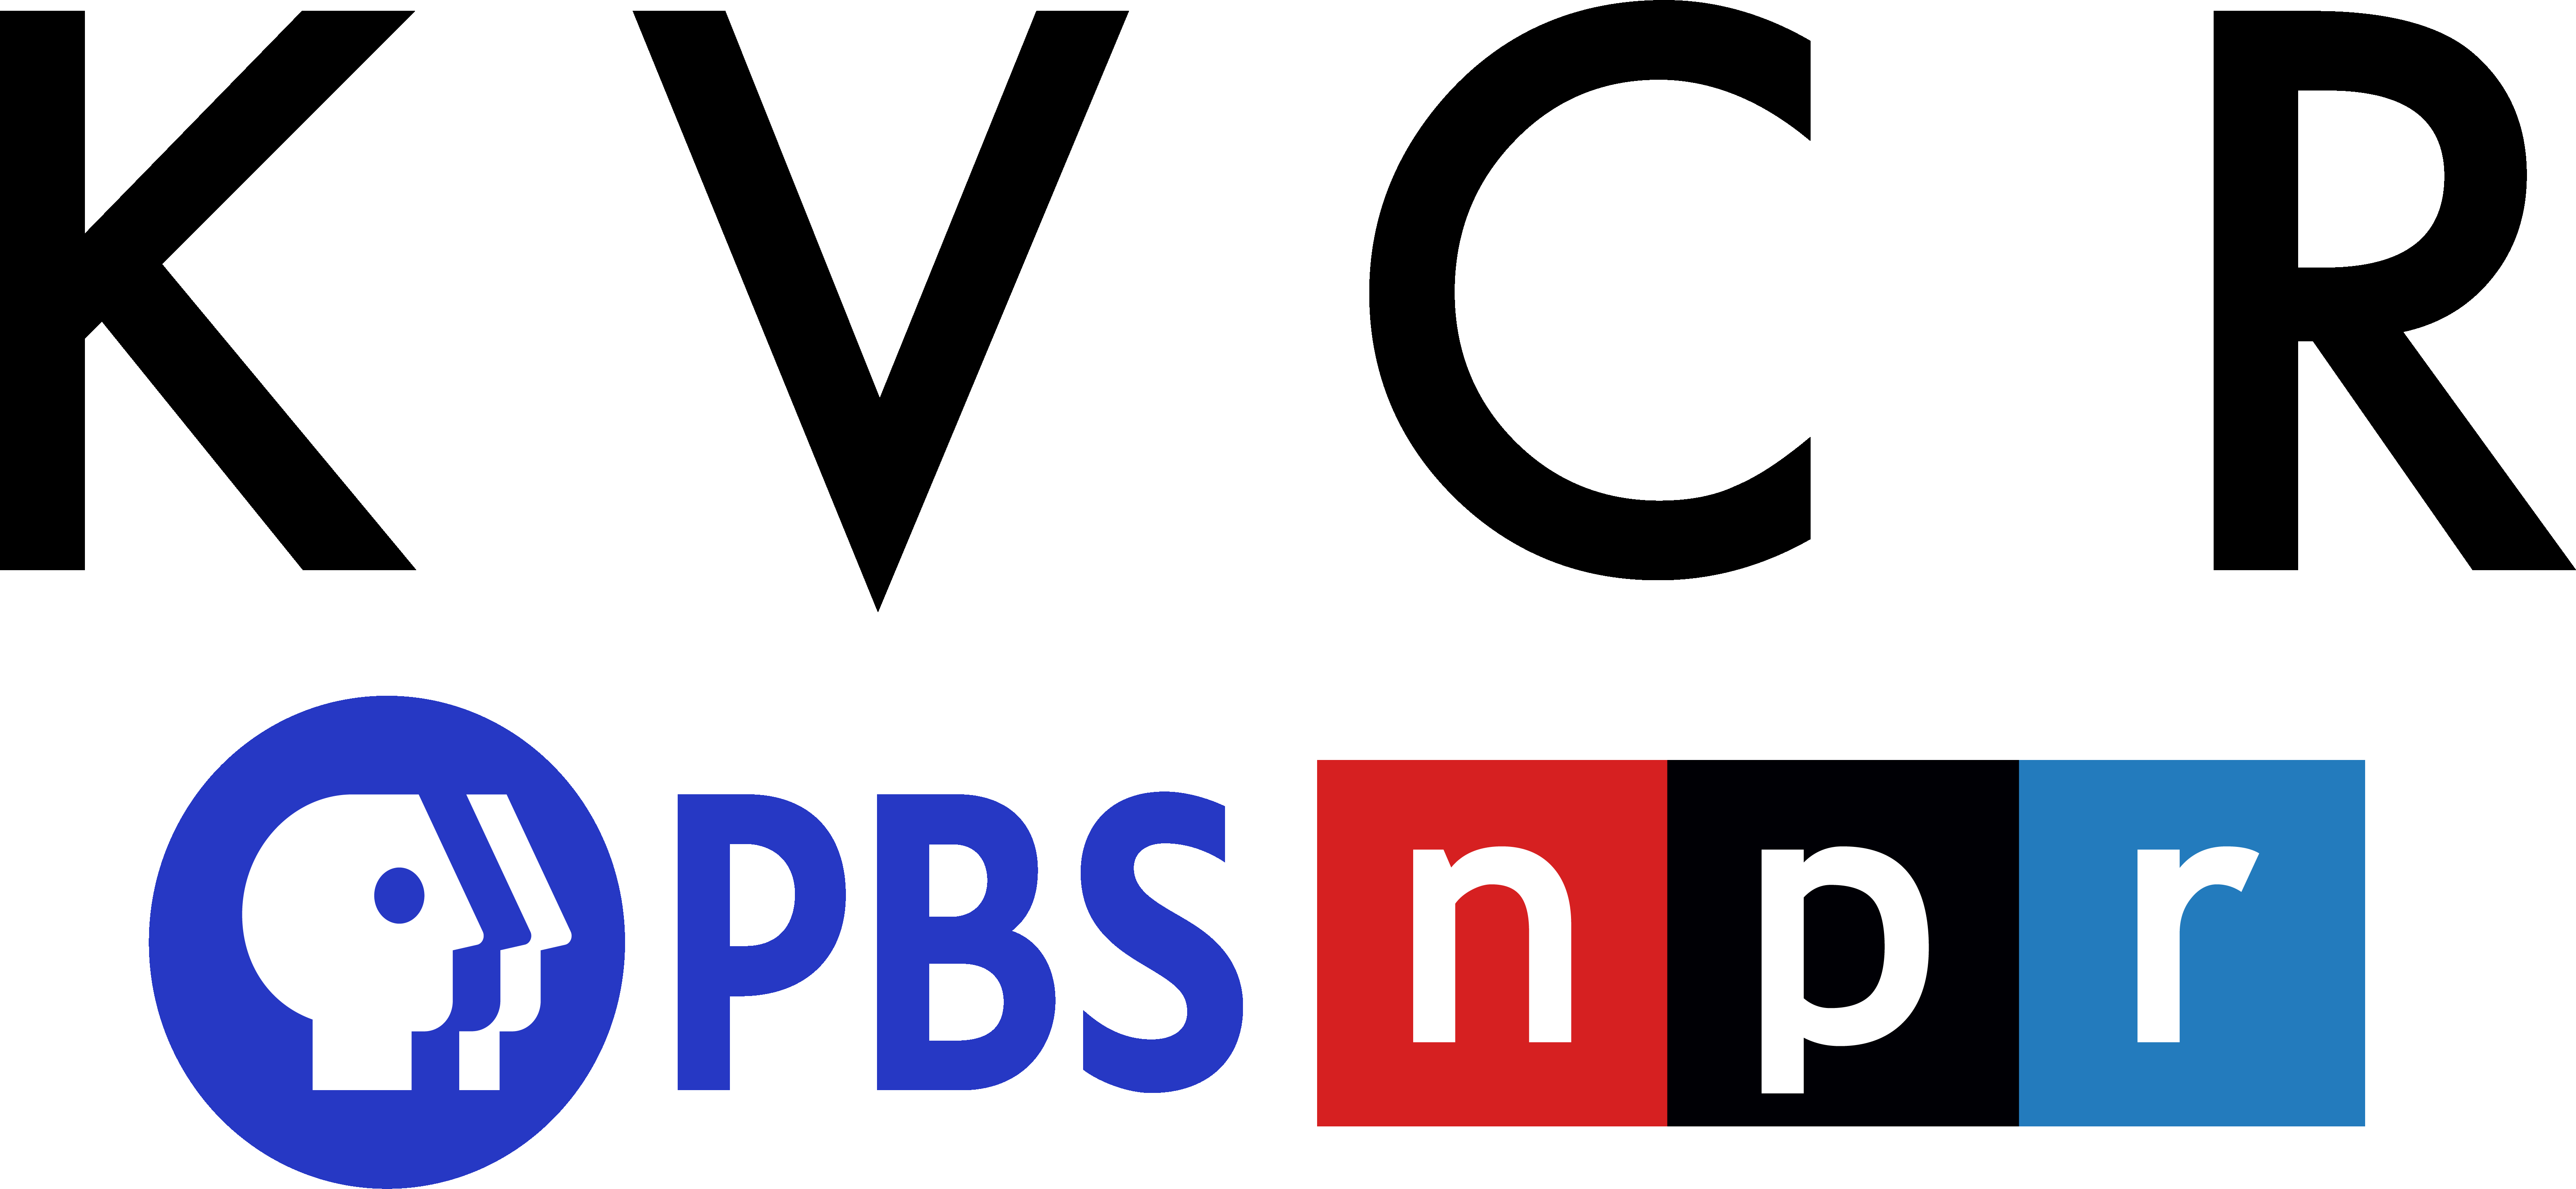 KVCR. PBS. npr.